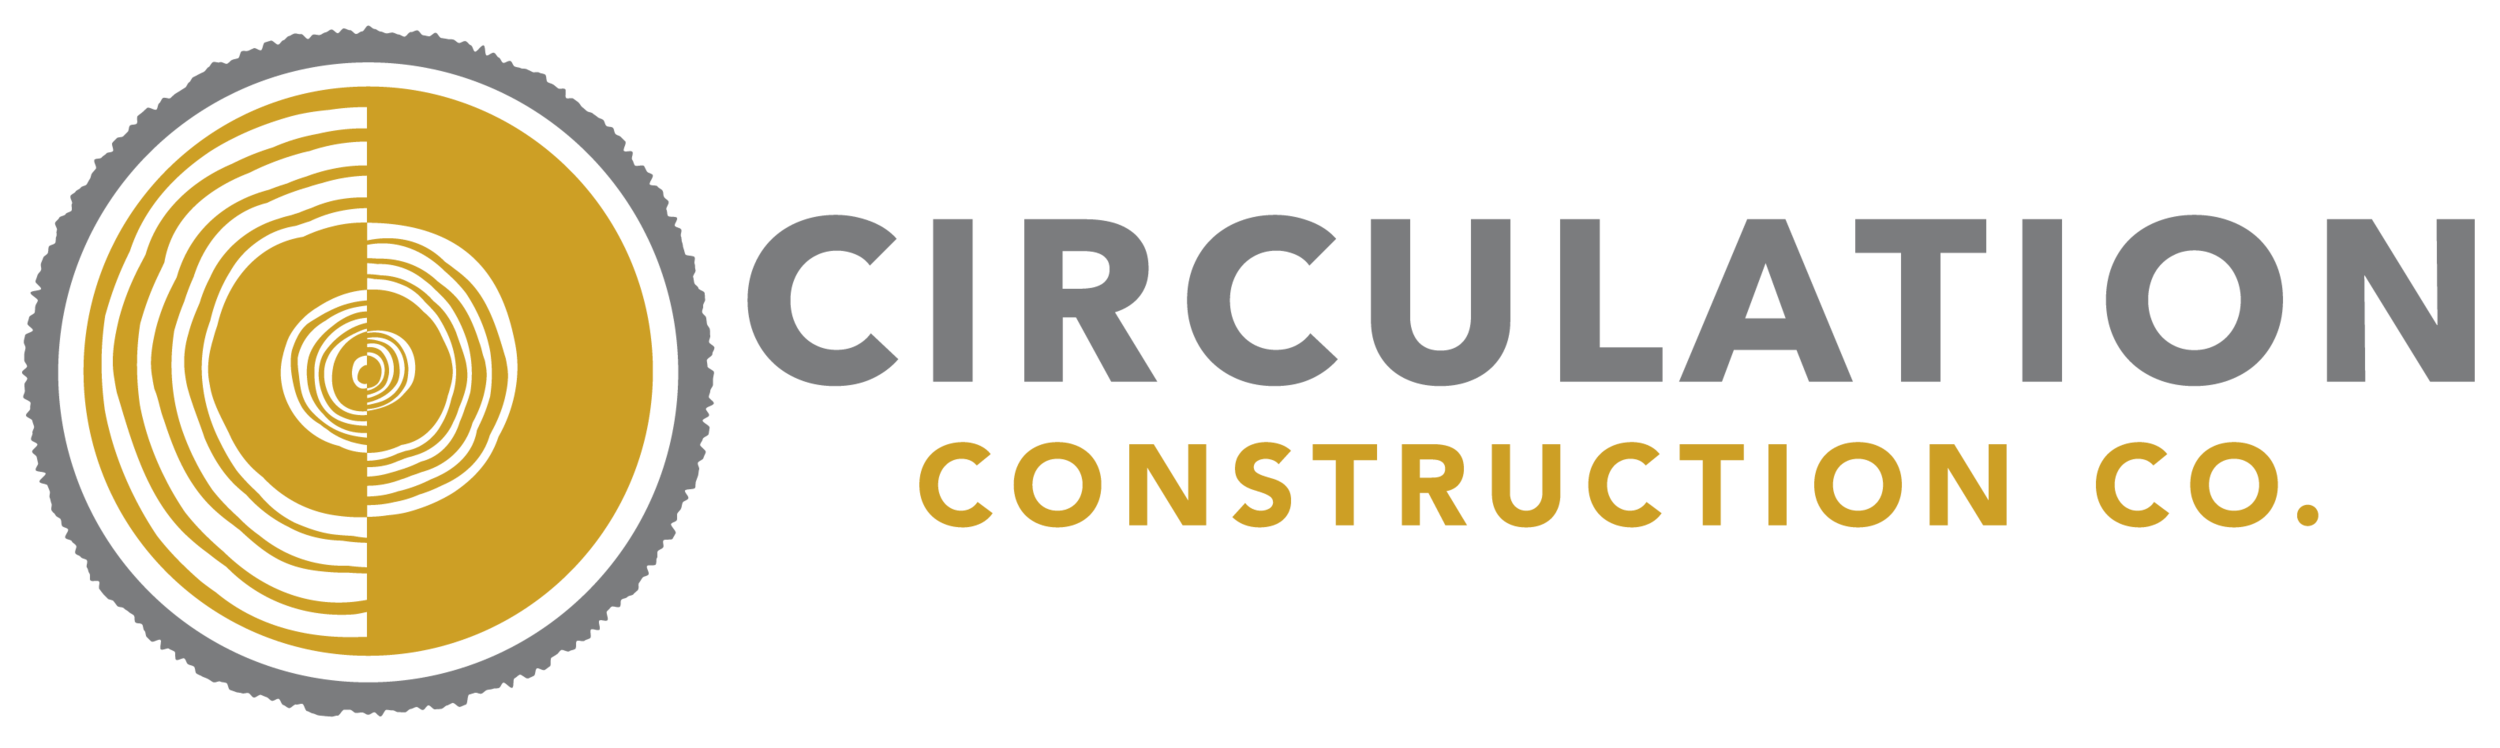 Circulation Construction